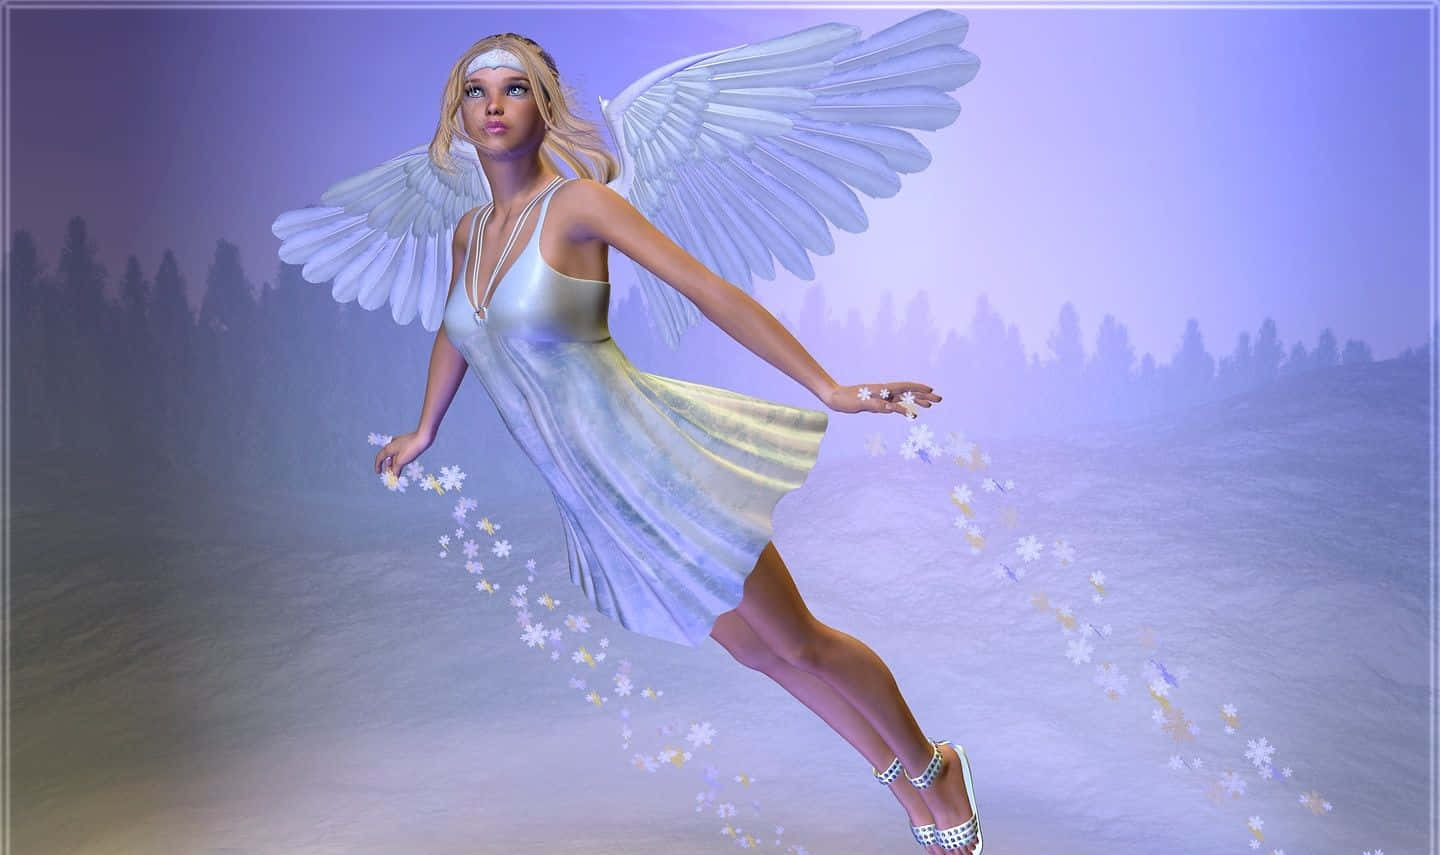 Girl Creating a Snow Angel in Winter Wonderland Wallpaper